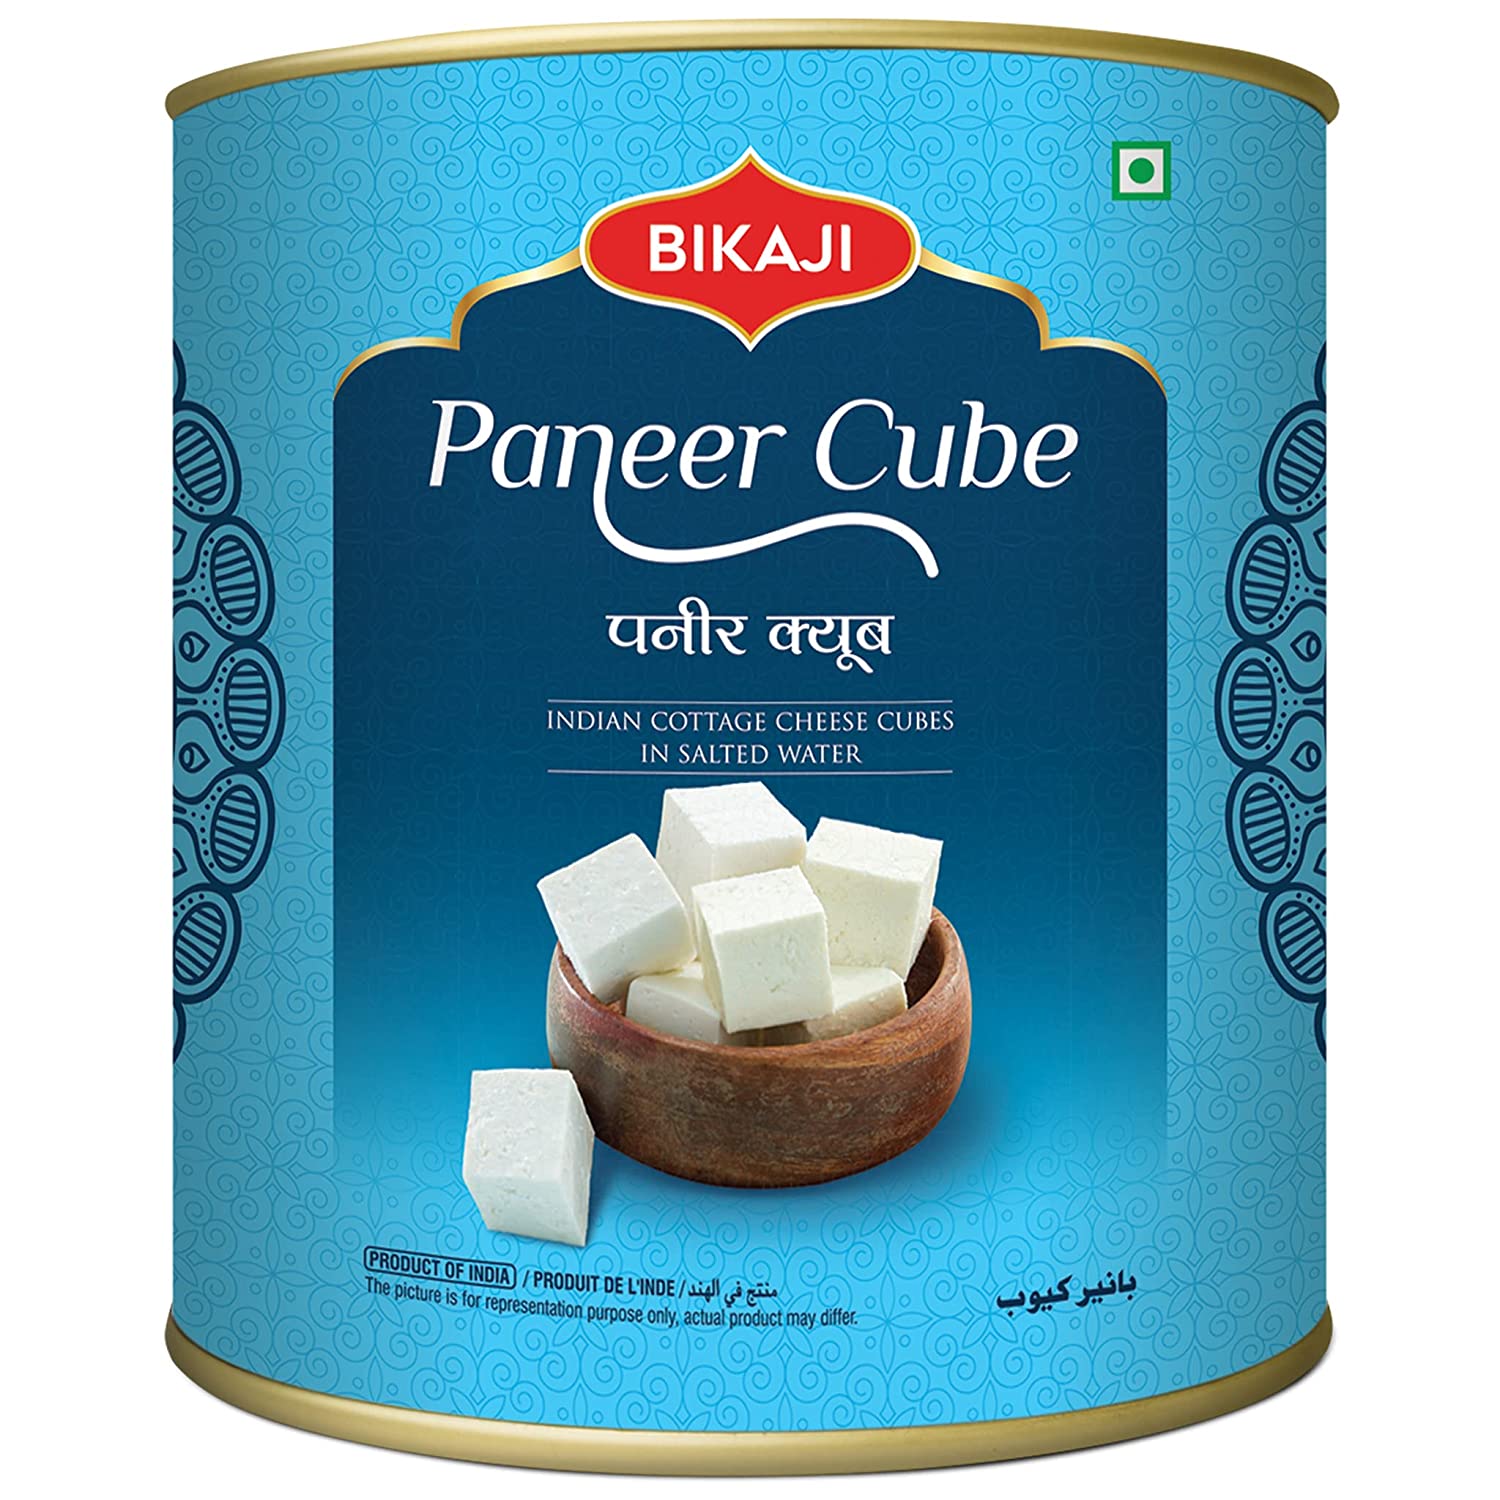 Bikaji Paneer Cube Image